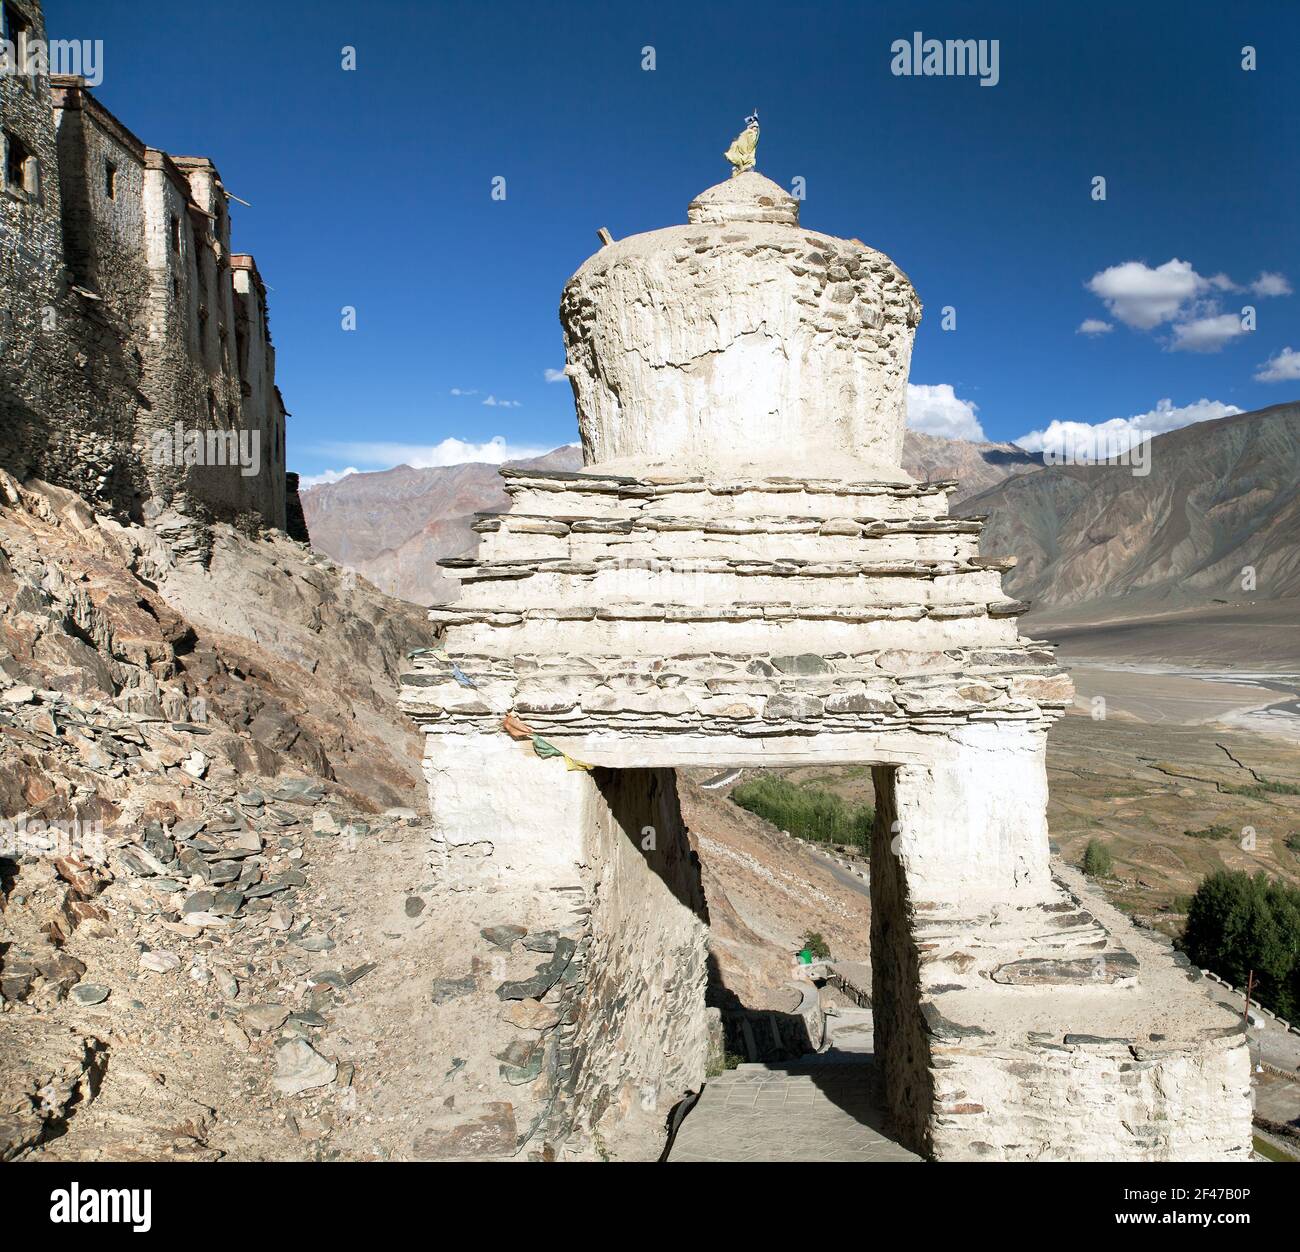 Stupa in Karsha gompa - buddhist monastery in Zanskar valley - Ladakh - Jammu and Kashmir - India Stock Photo